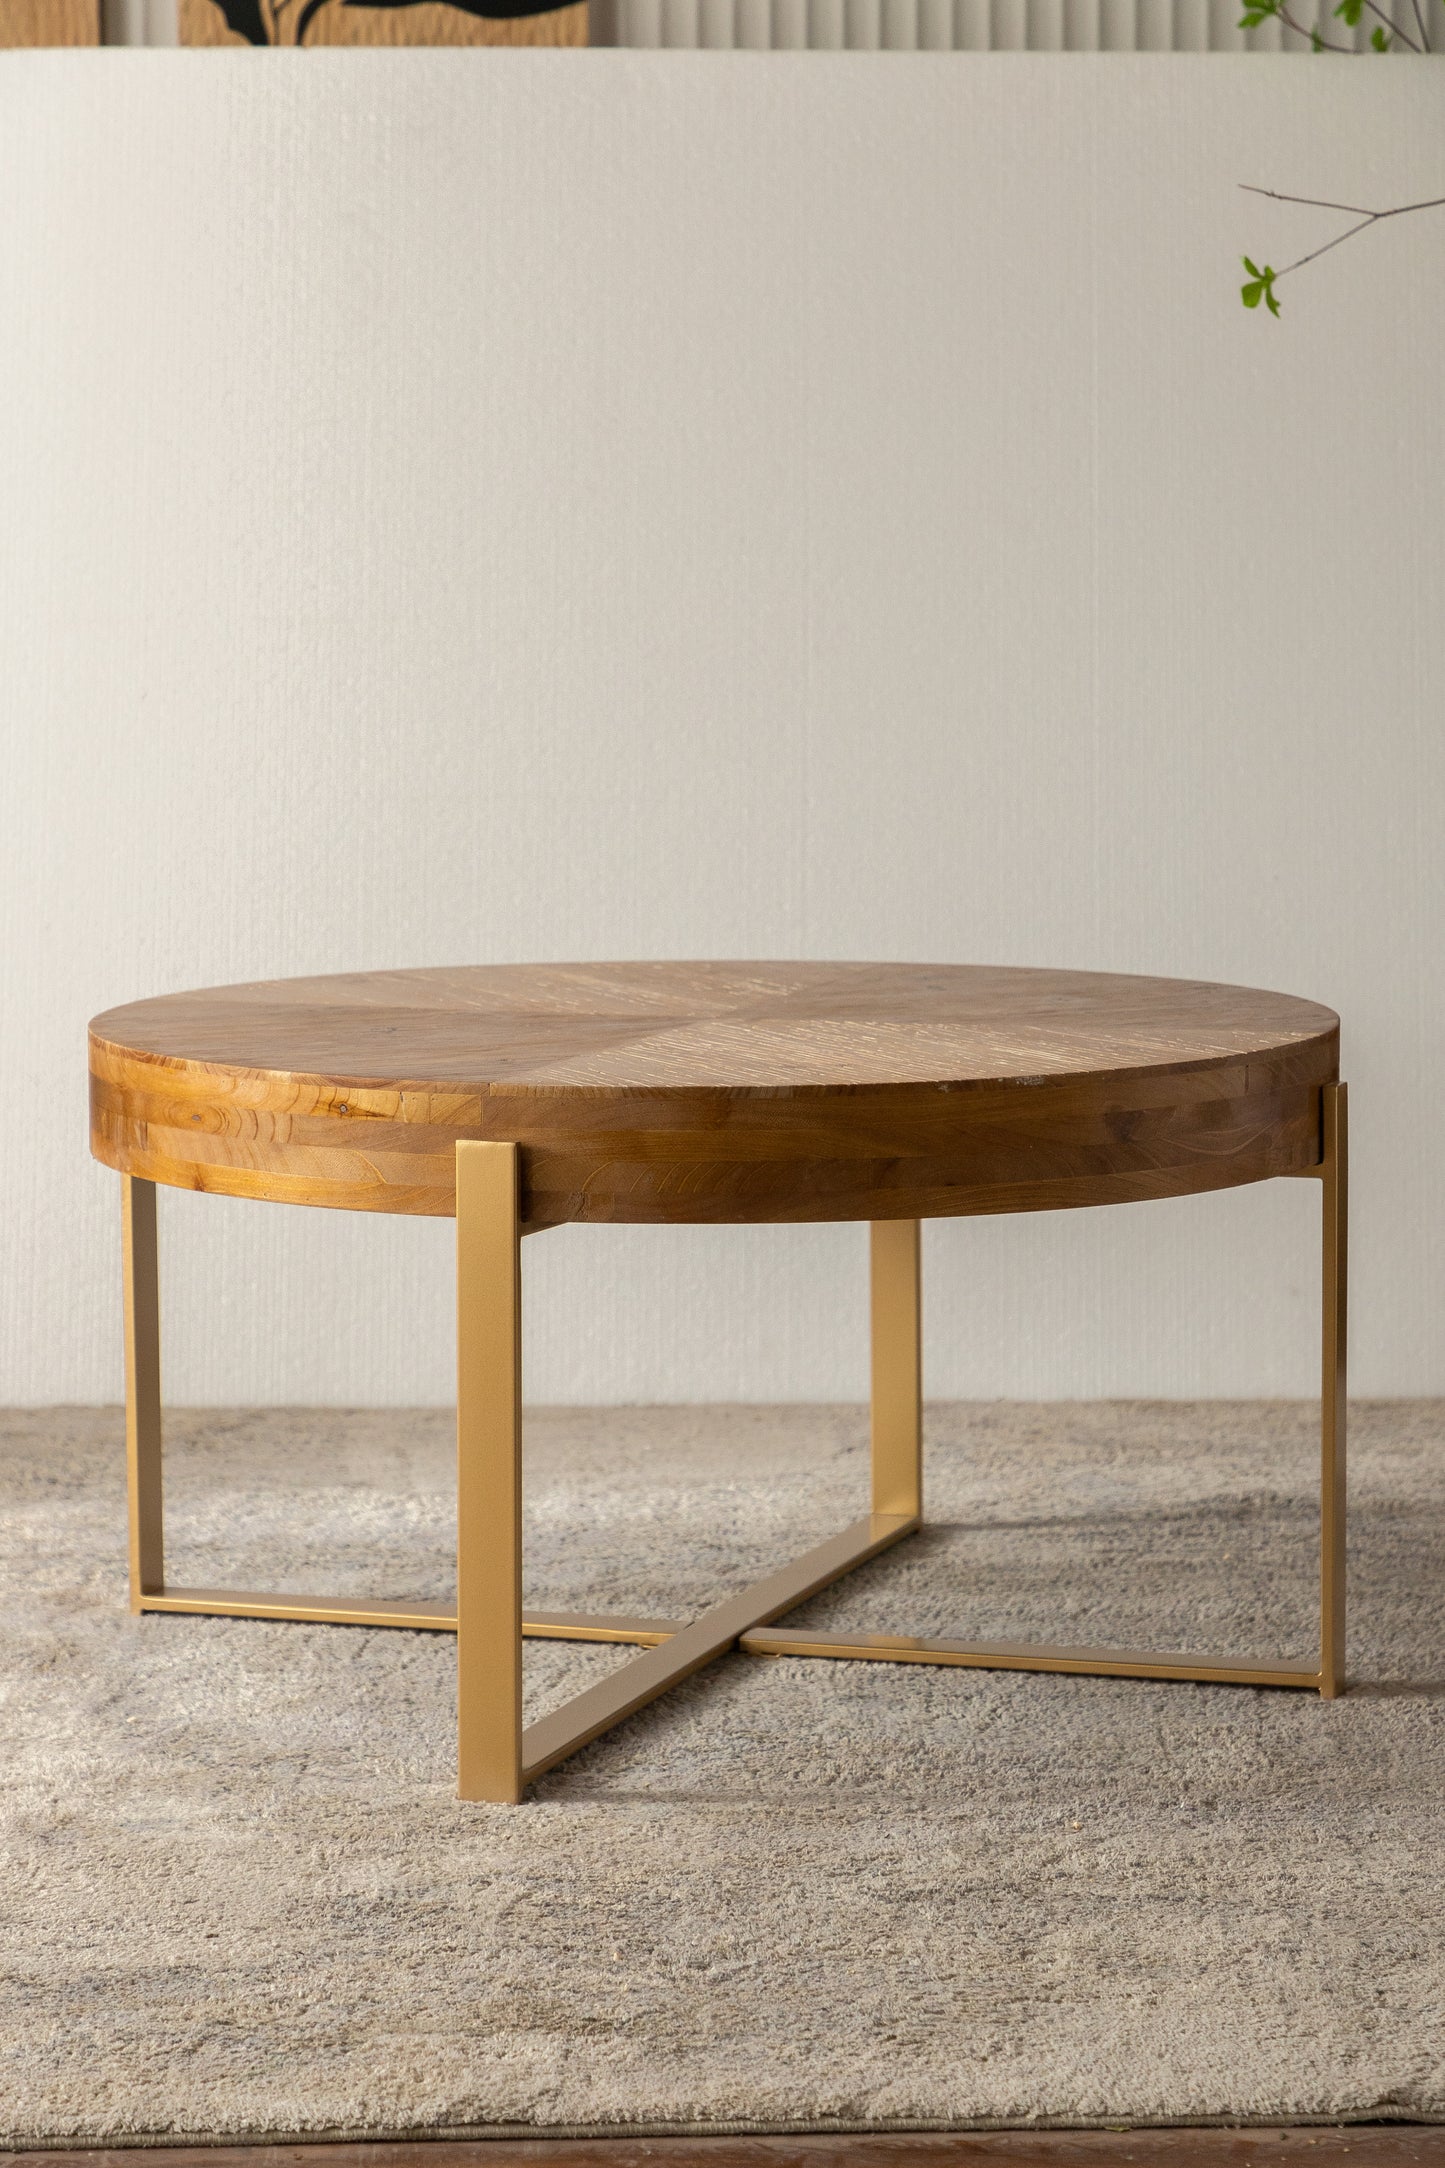 33.86" Fir Wood & Gold Cross Legs Base Round Coffee Table